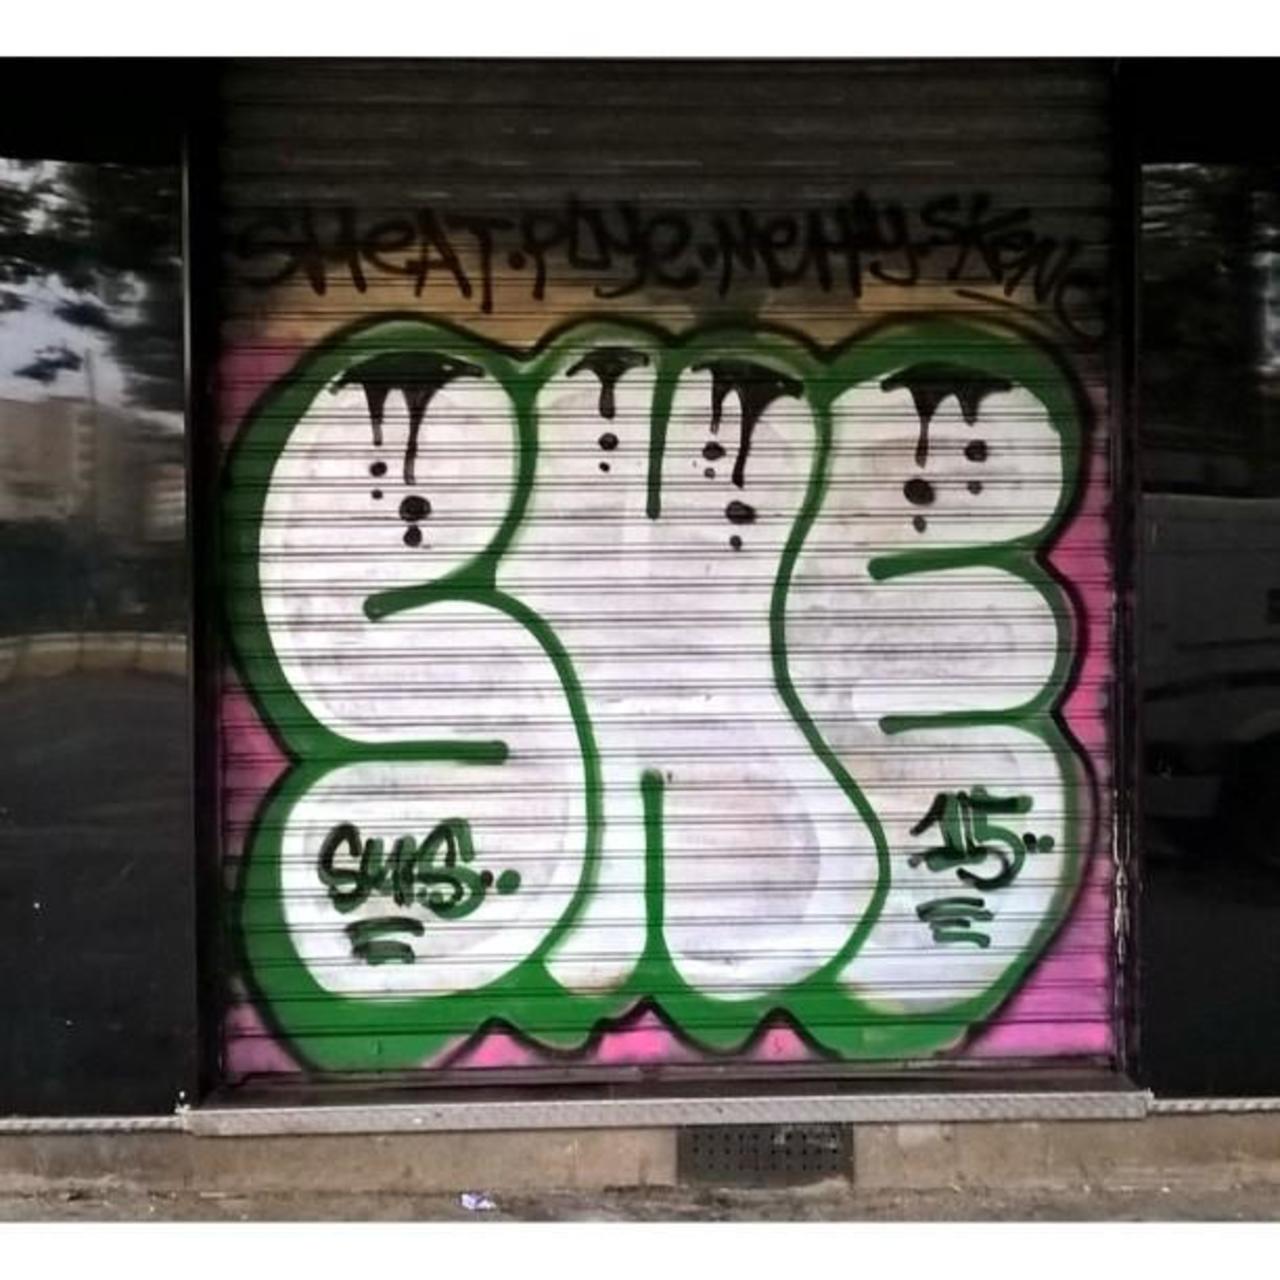 #Paris #graffiti photo by @maxdimontemarciano http://ift.tt/1FUicDG #StreetArt http://t.co/rOmasyd8fw